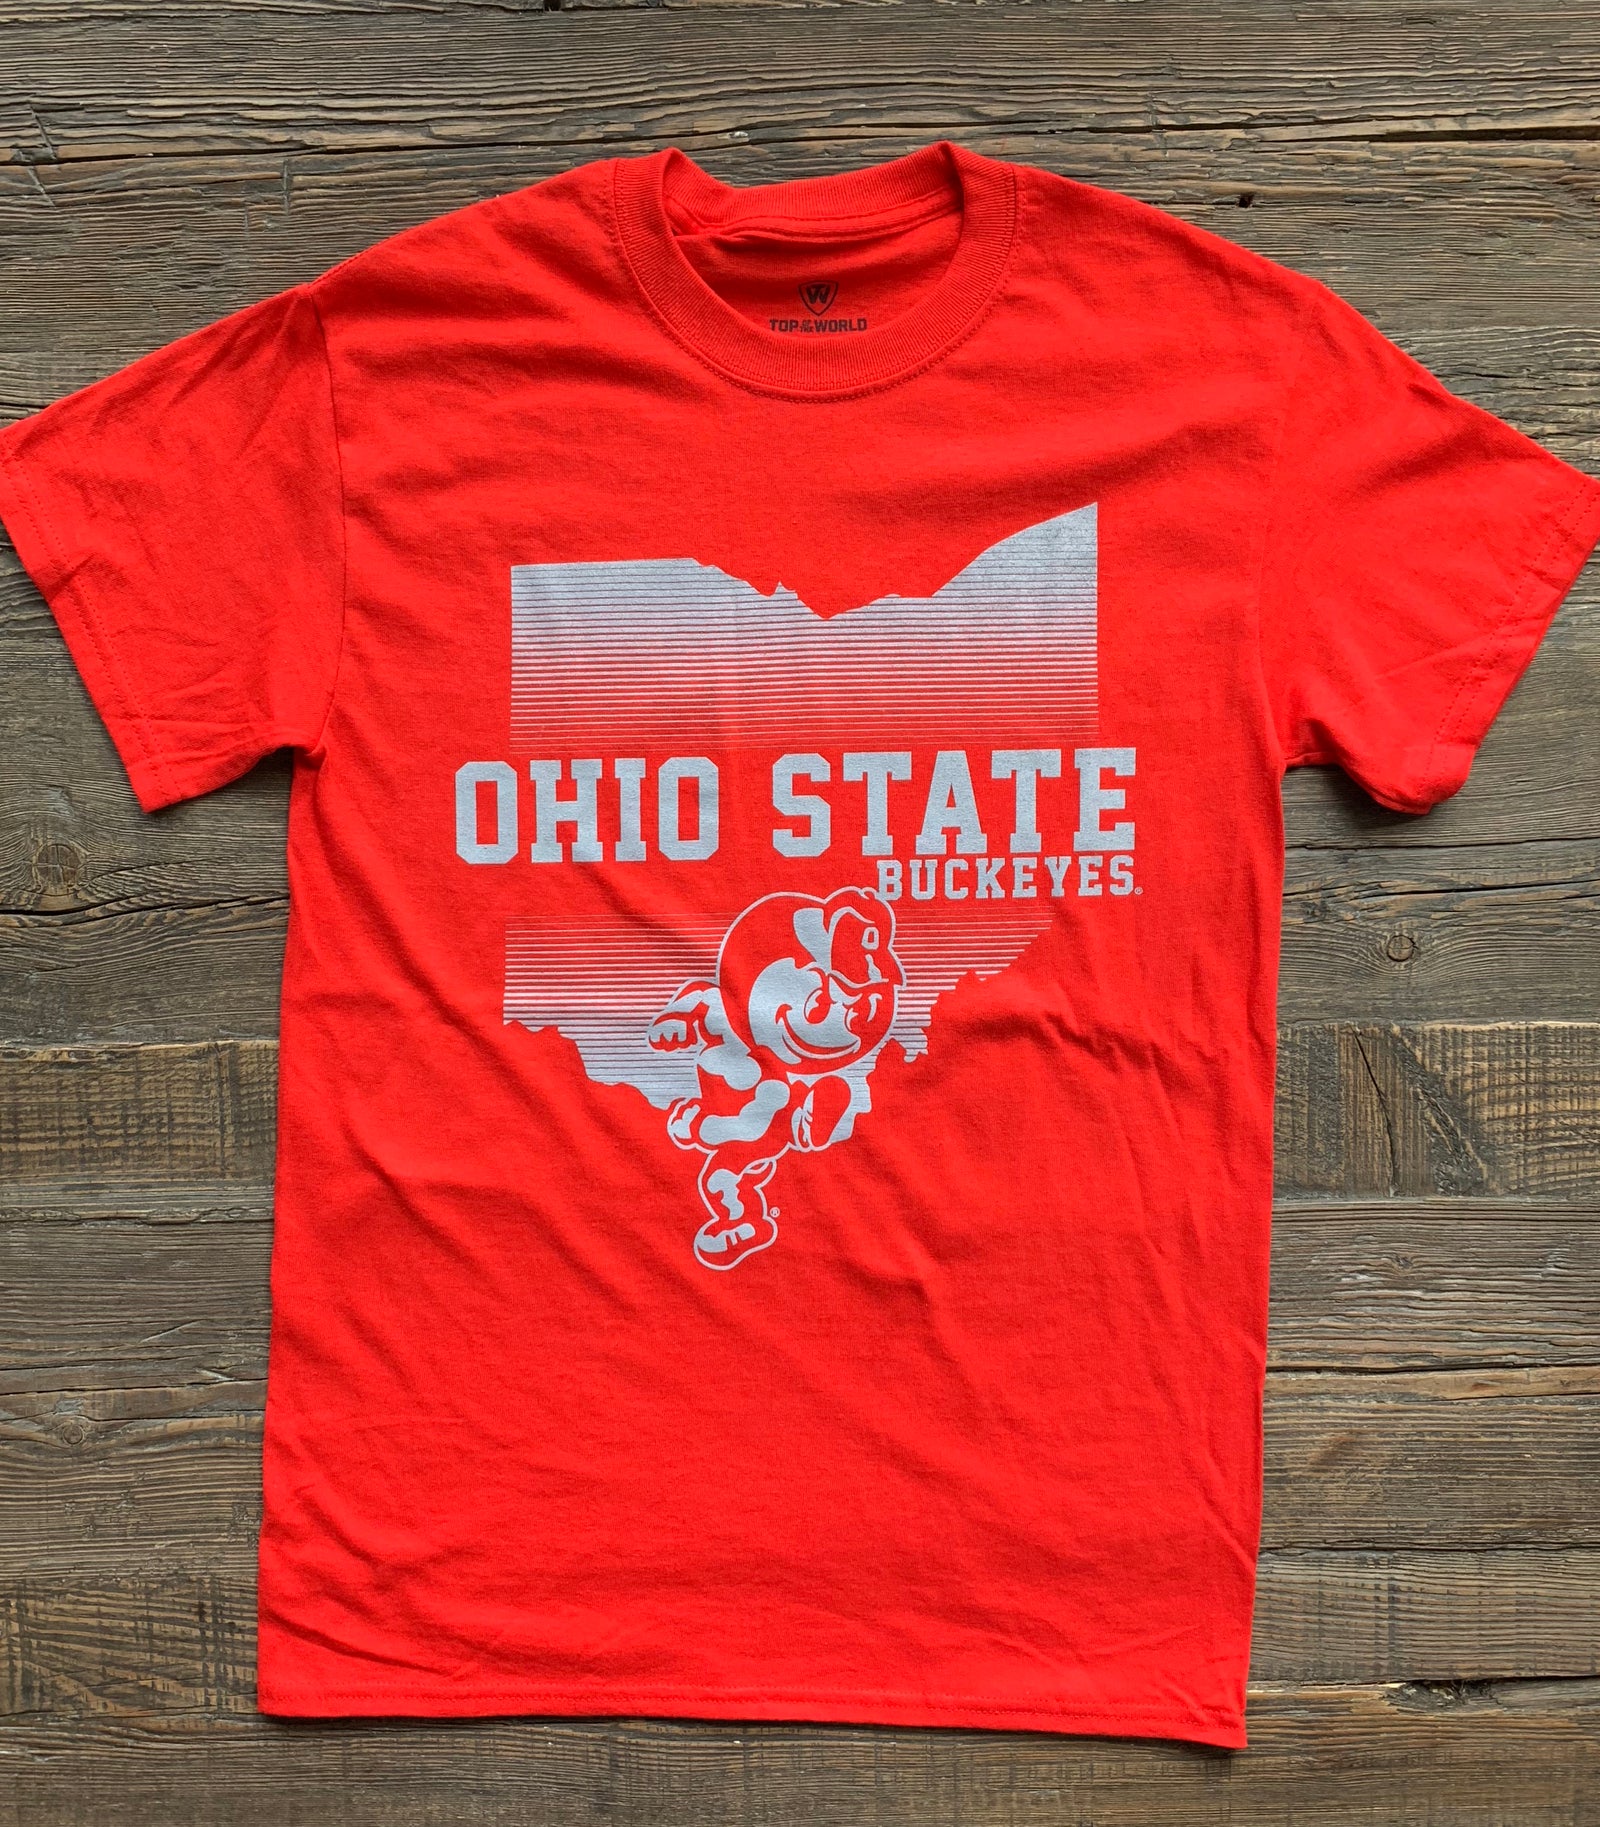 Ohio State Buckeyes Tshirt Ohio State Game Day Shirts College Apparel Ohio  State Buck You Gameday Apparel Ohio State Buckeye Shirts 